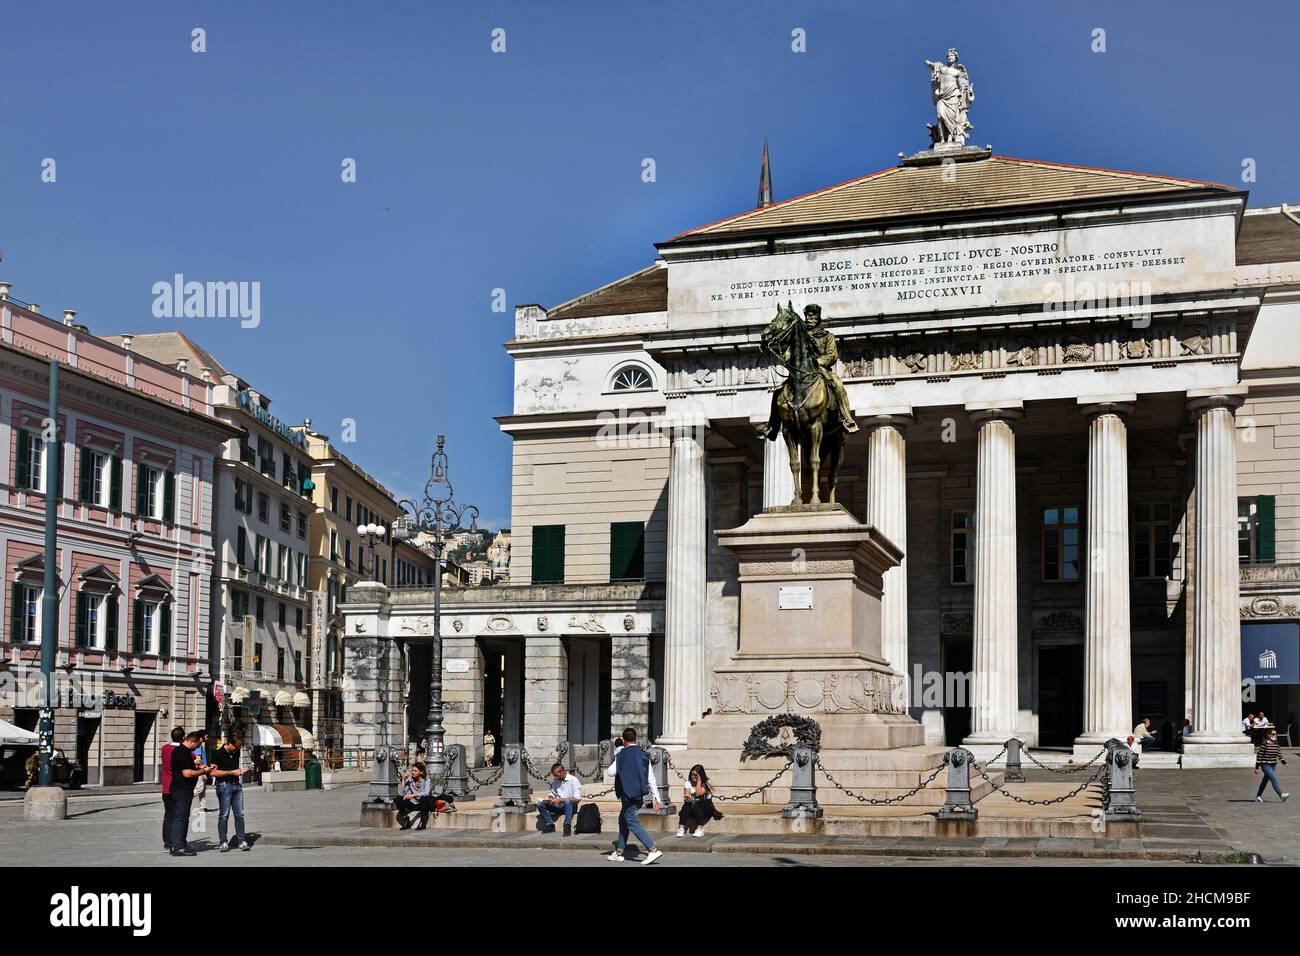 Statua equestre di Guiseppe Garibaldi di fronte al Teatro Carol Felice in Piazza De Ferrari, Genova, Italia Genova, Genova, Italia, Italiano. Foto Stock